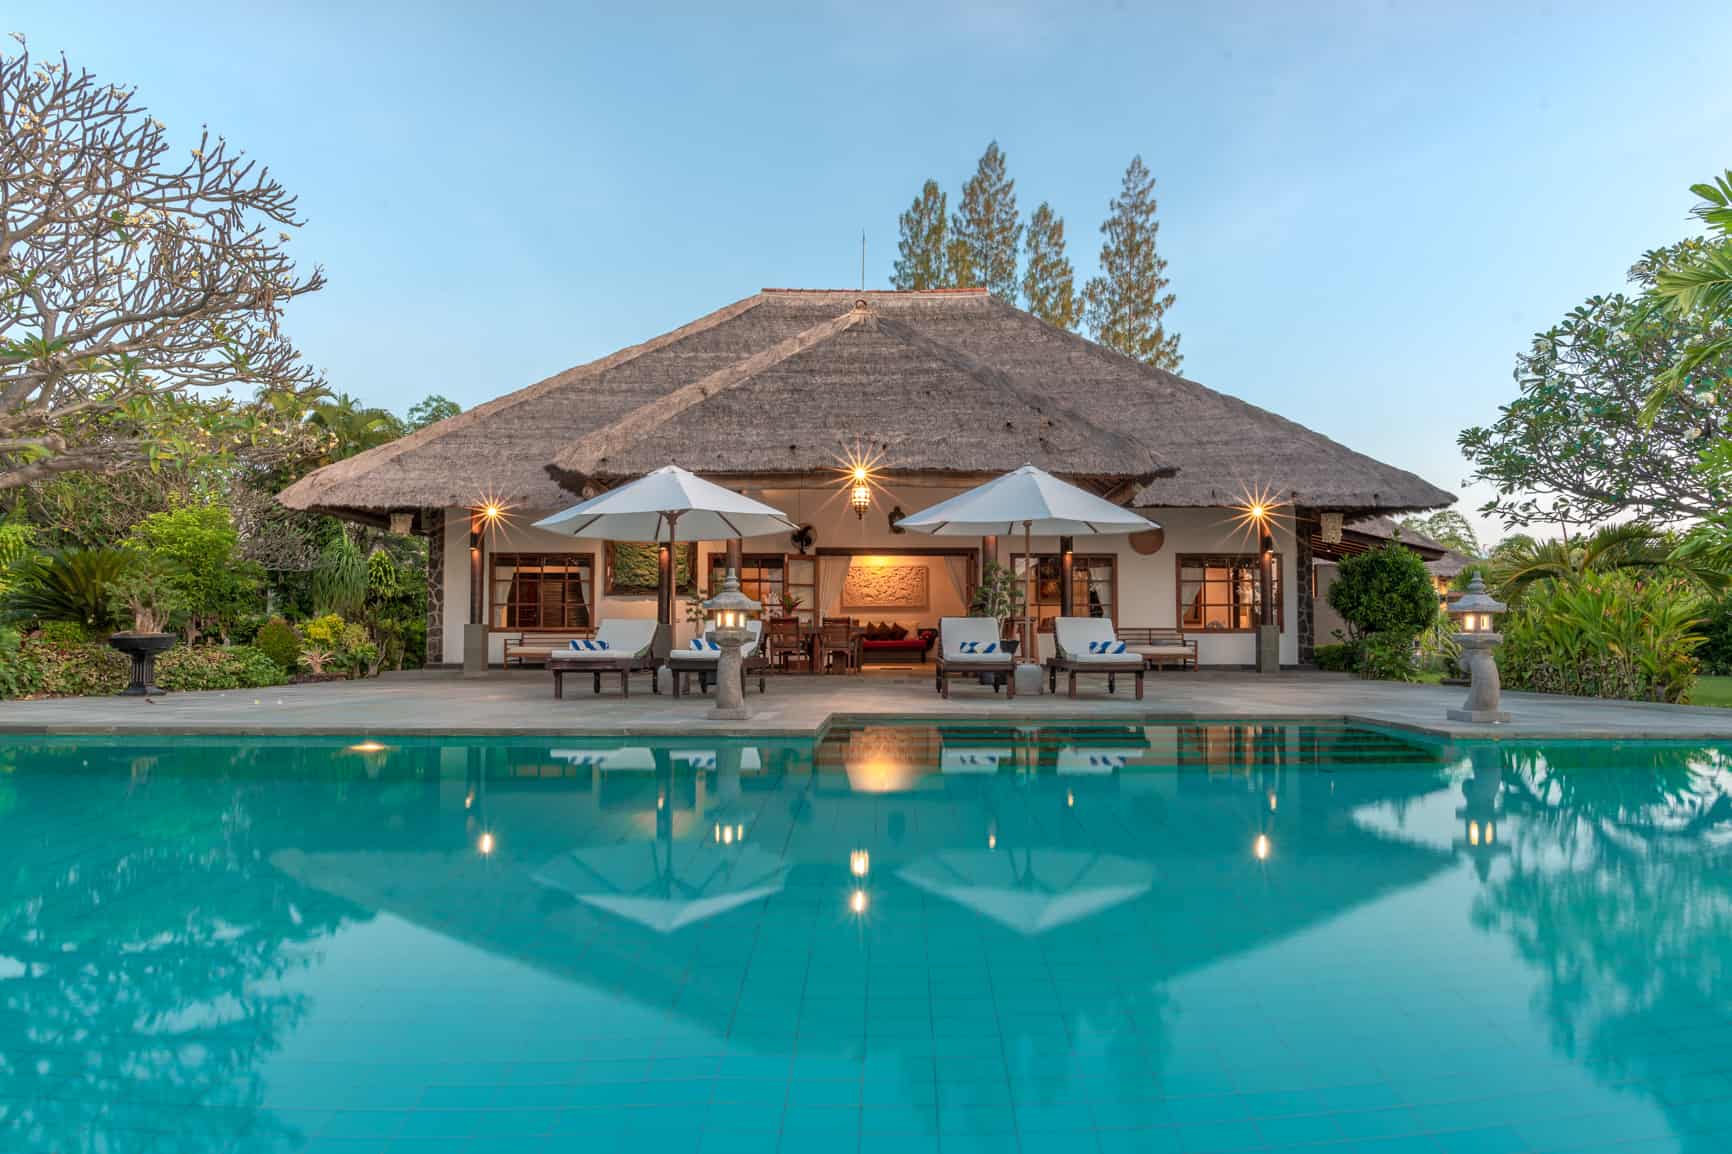 Villa Segara Murti, Bali - Stylish Beachfront Villa! - Bali Vacation Homes